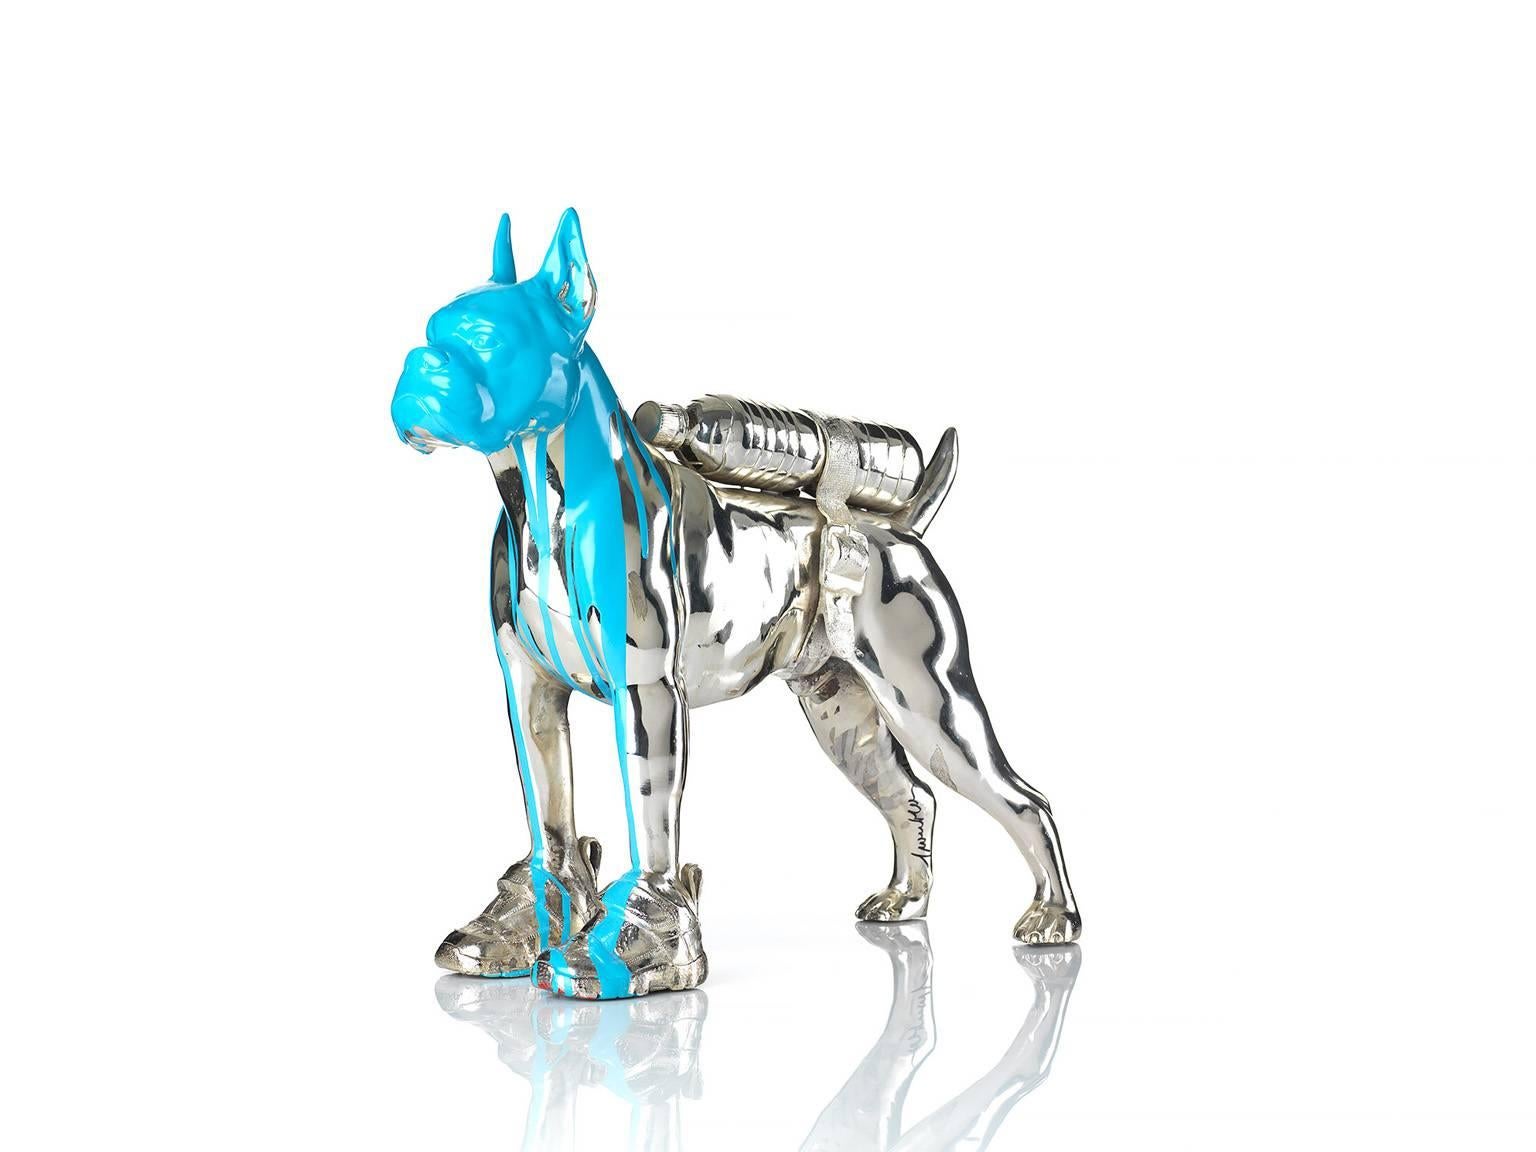 William Sweetlove Figurative Sculpture - Cloned Bulldog with pet bottle. 